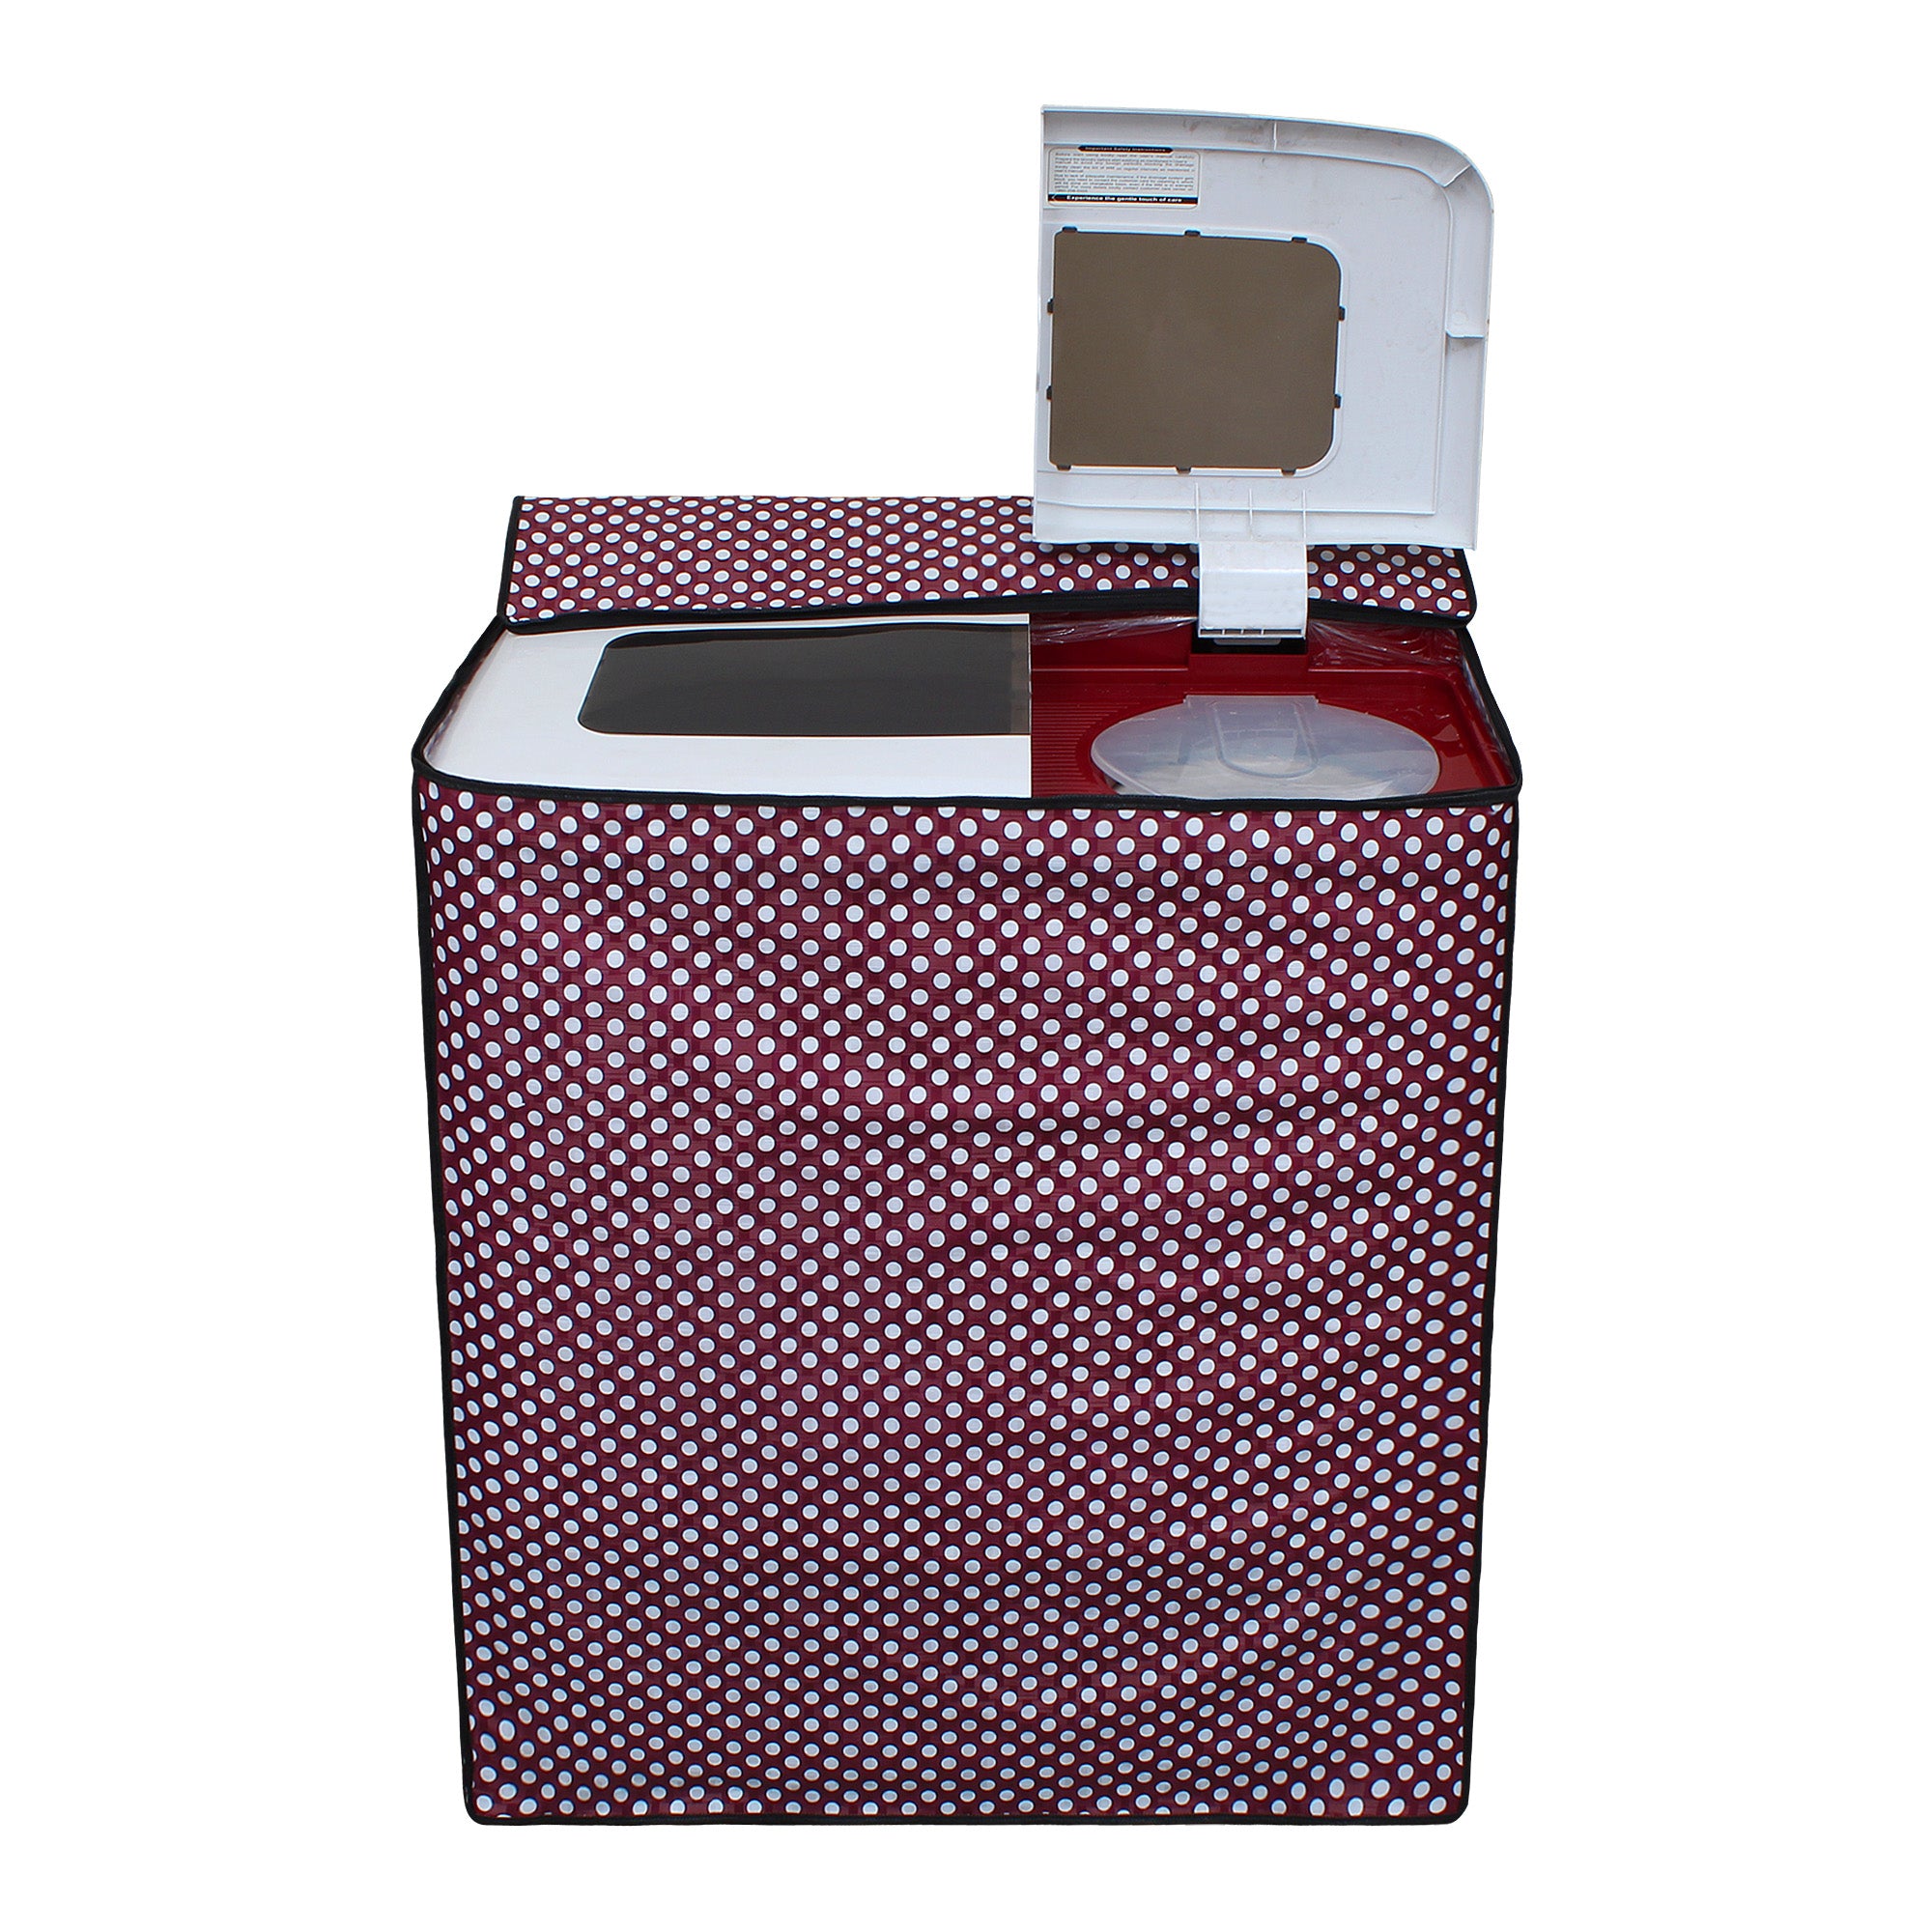 Semi Automatic Washing Machine Cover, SA46 - Dream Care Furnishings Private Limited